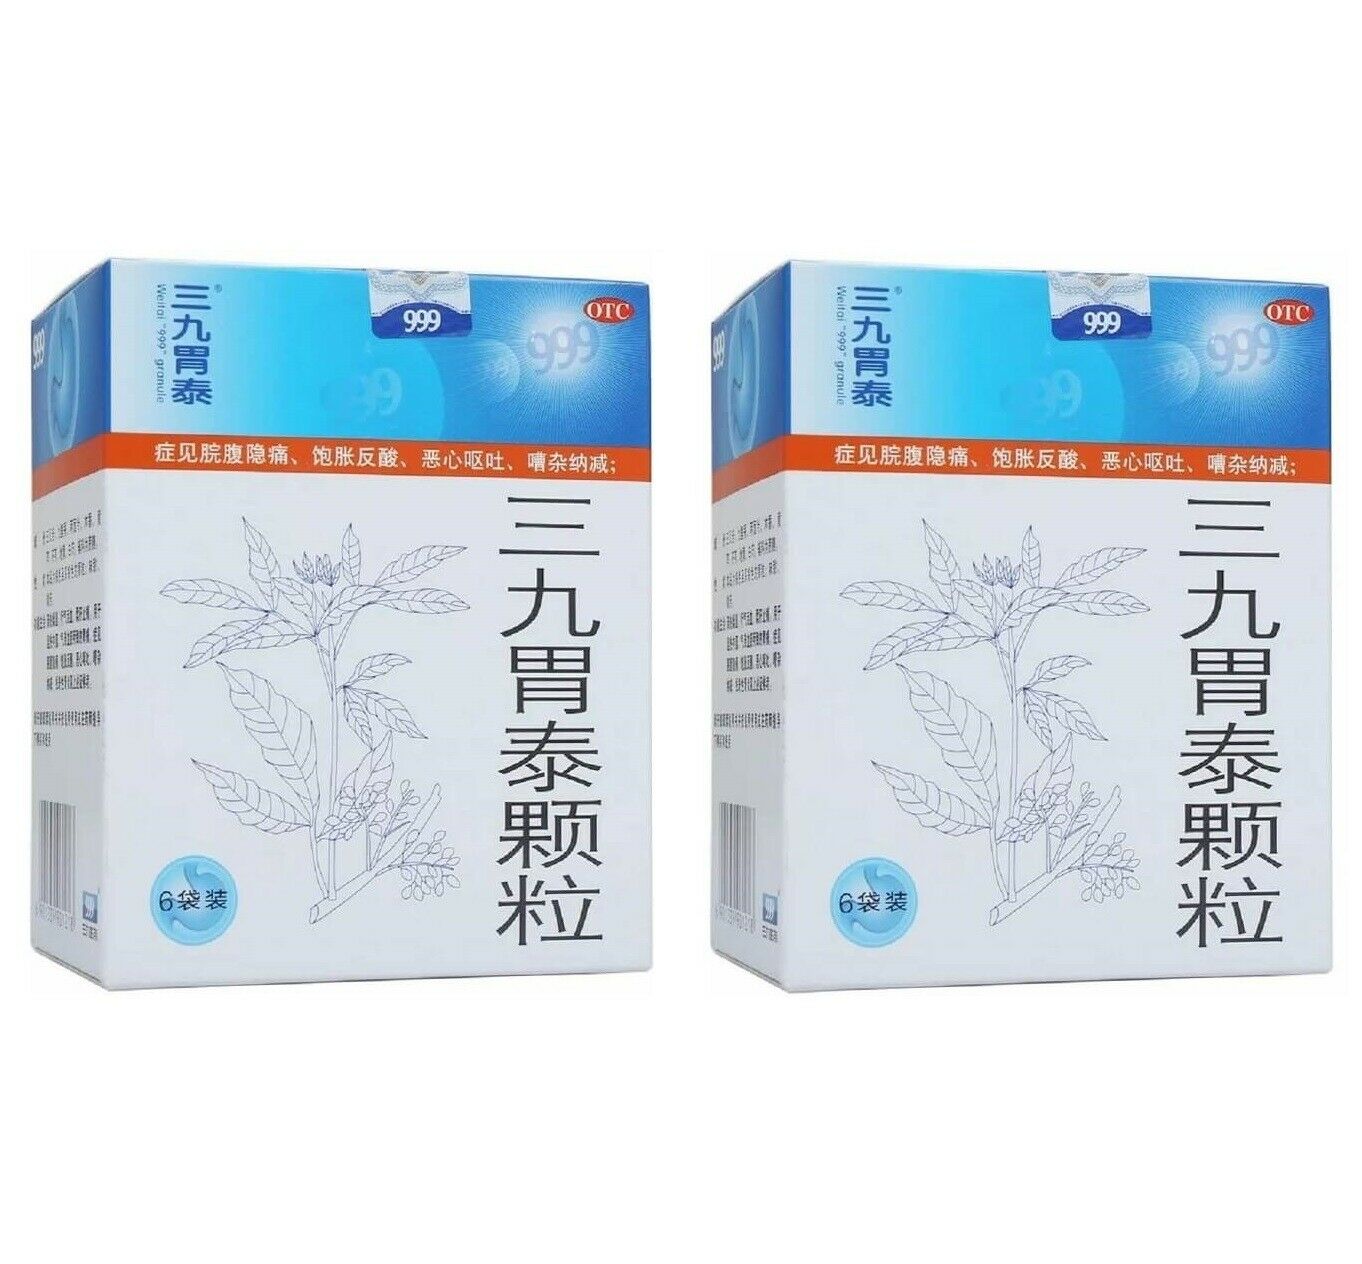 999 Wei Tai Ke Li【2 Boxes】(20g X 6 Bags Per Box) 三九胃泰颗粒 2盒